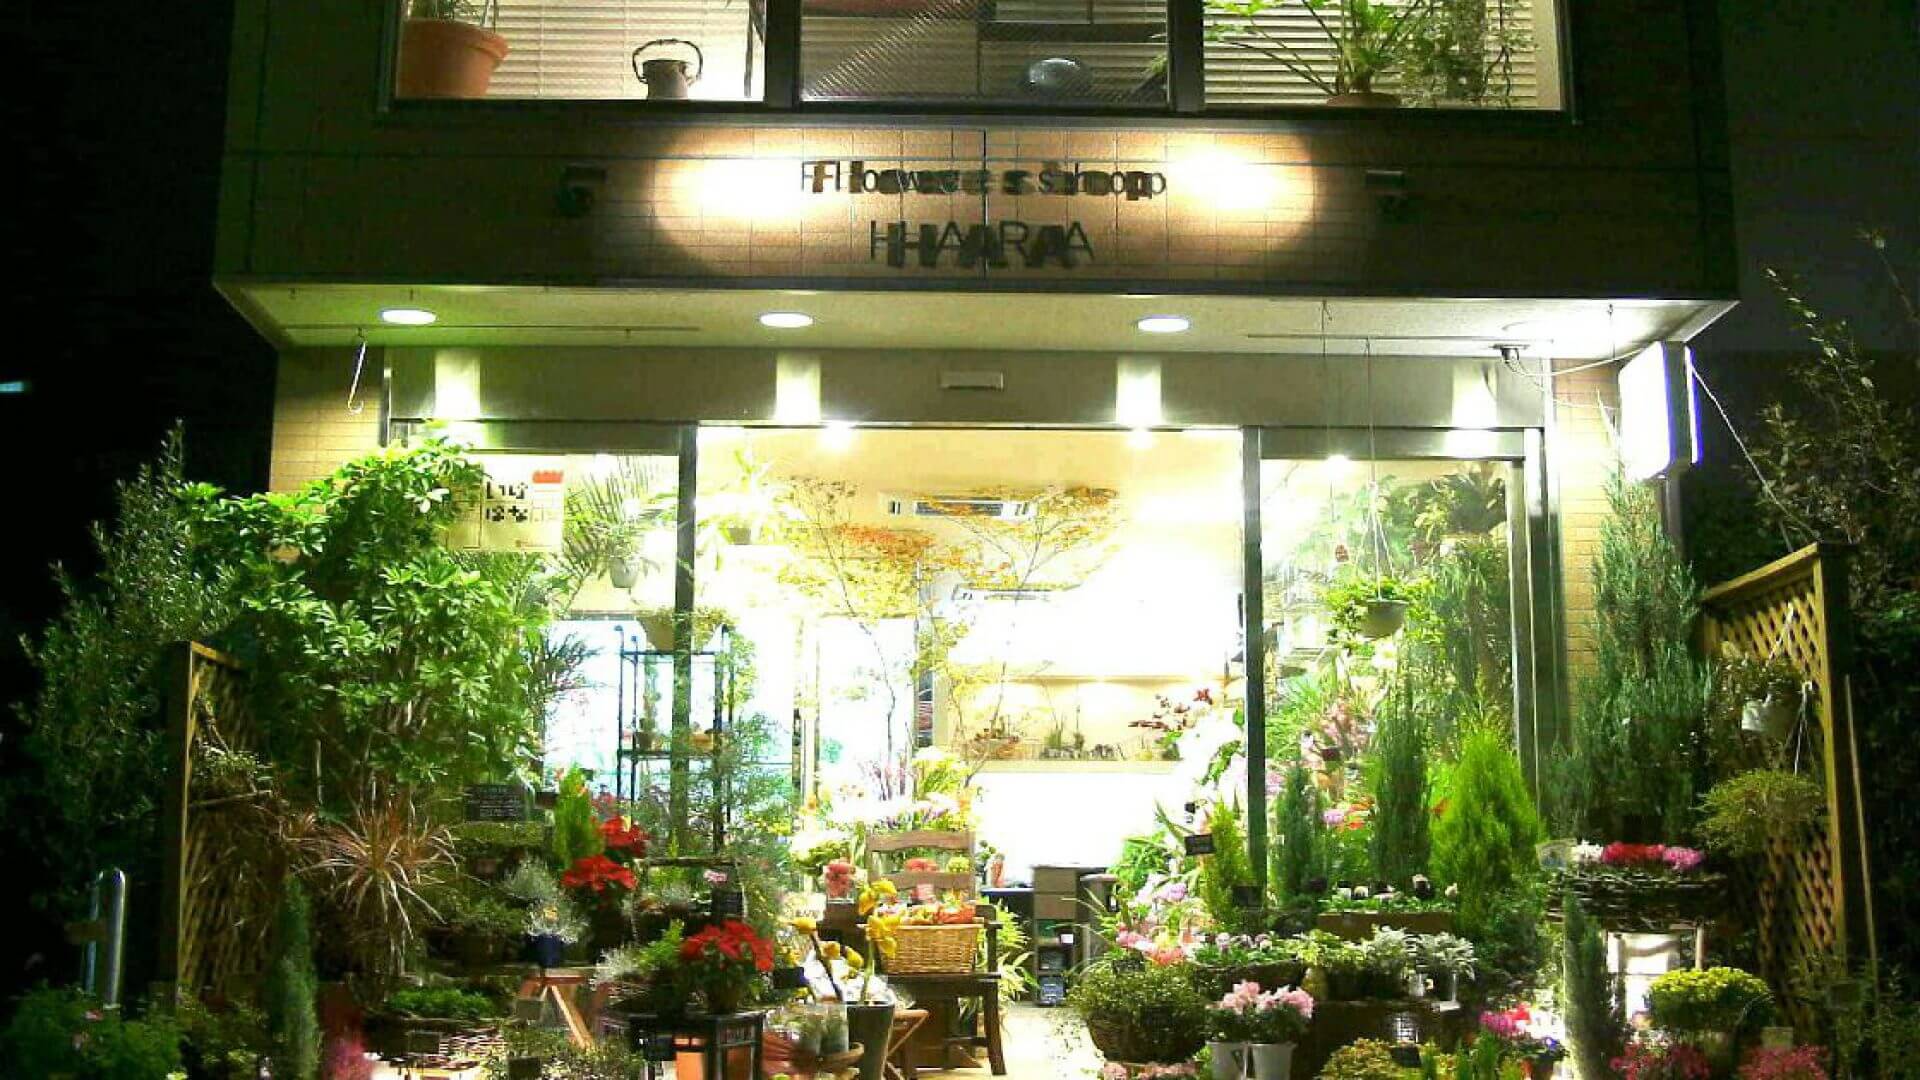 Flower Shop HARA